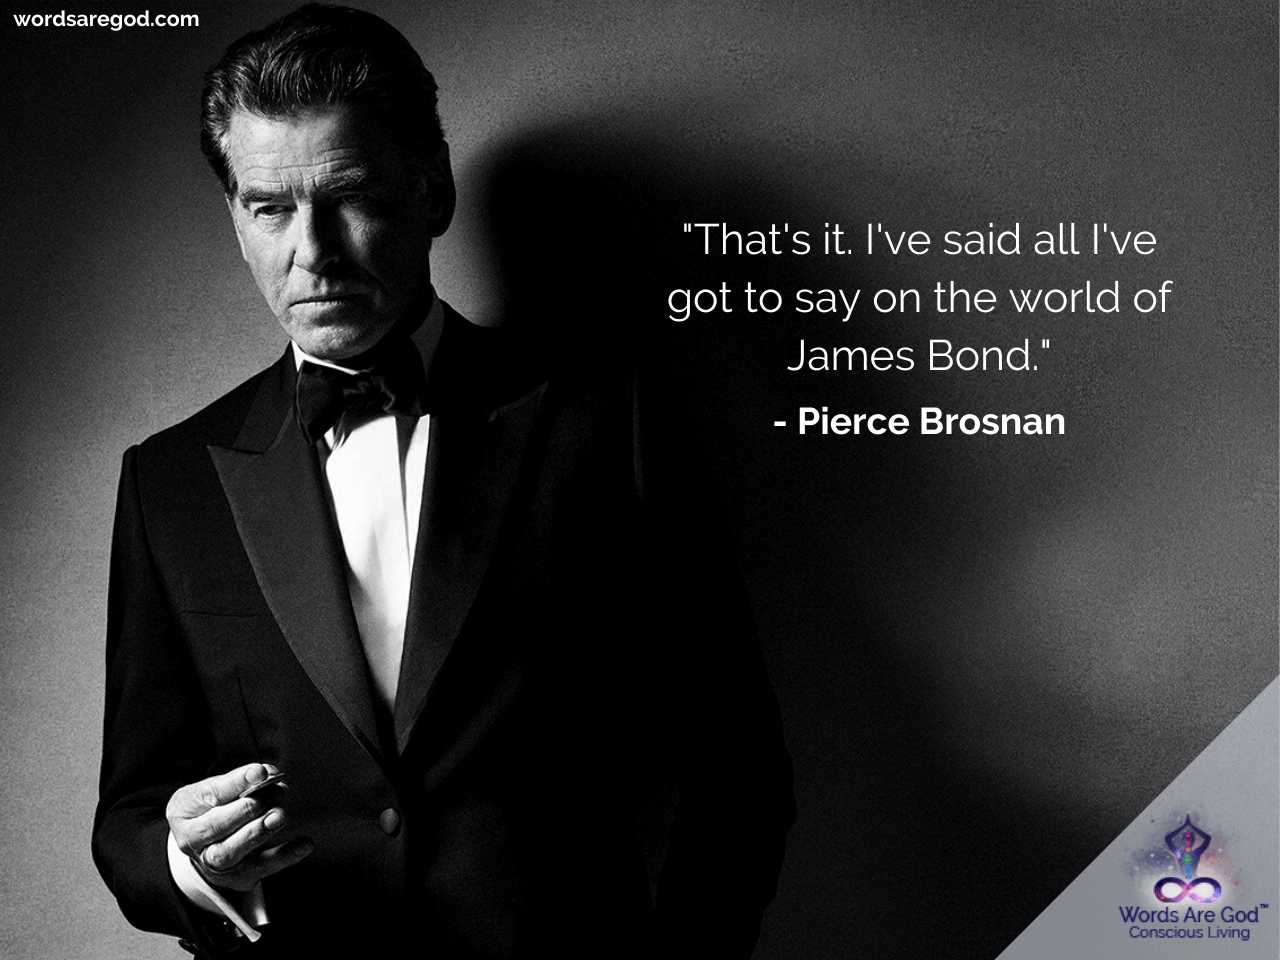 Pierce Brosnan Motivational Quotes